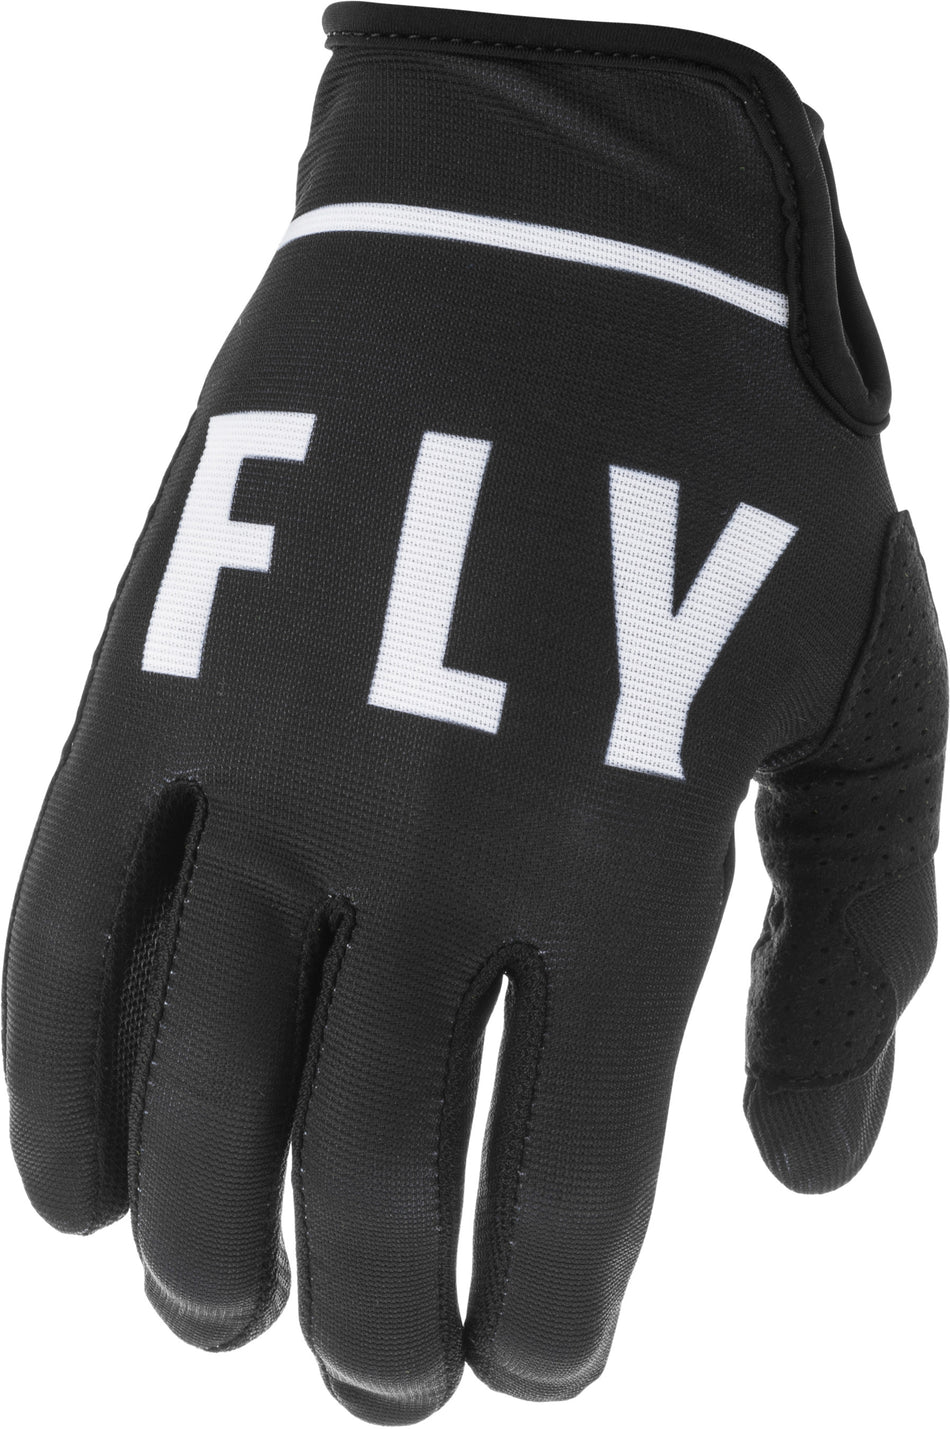 FLY RACING Lite Gloves Black/White Sz 12 373-71112